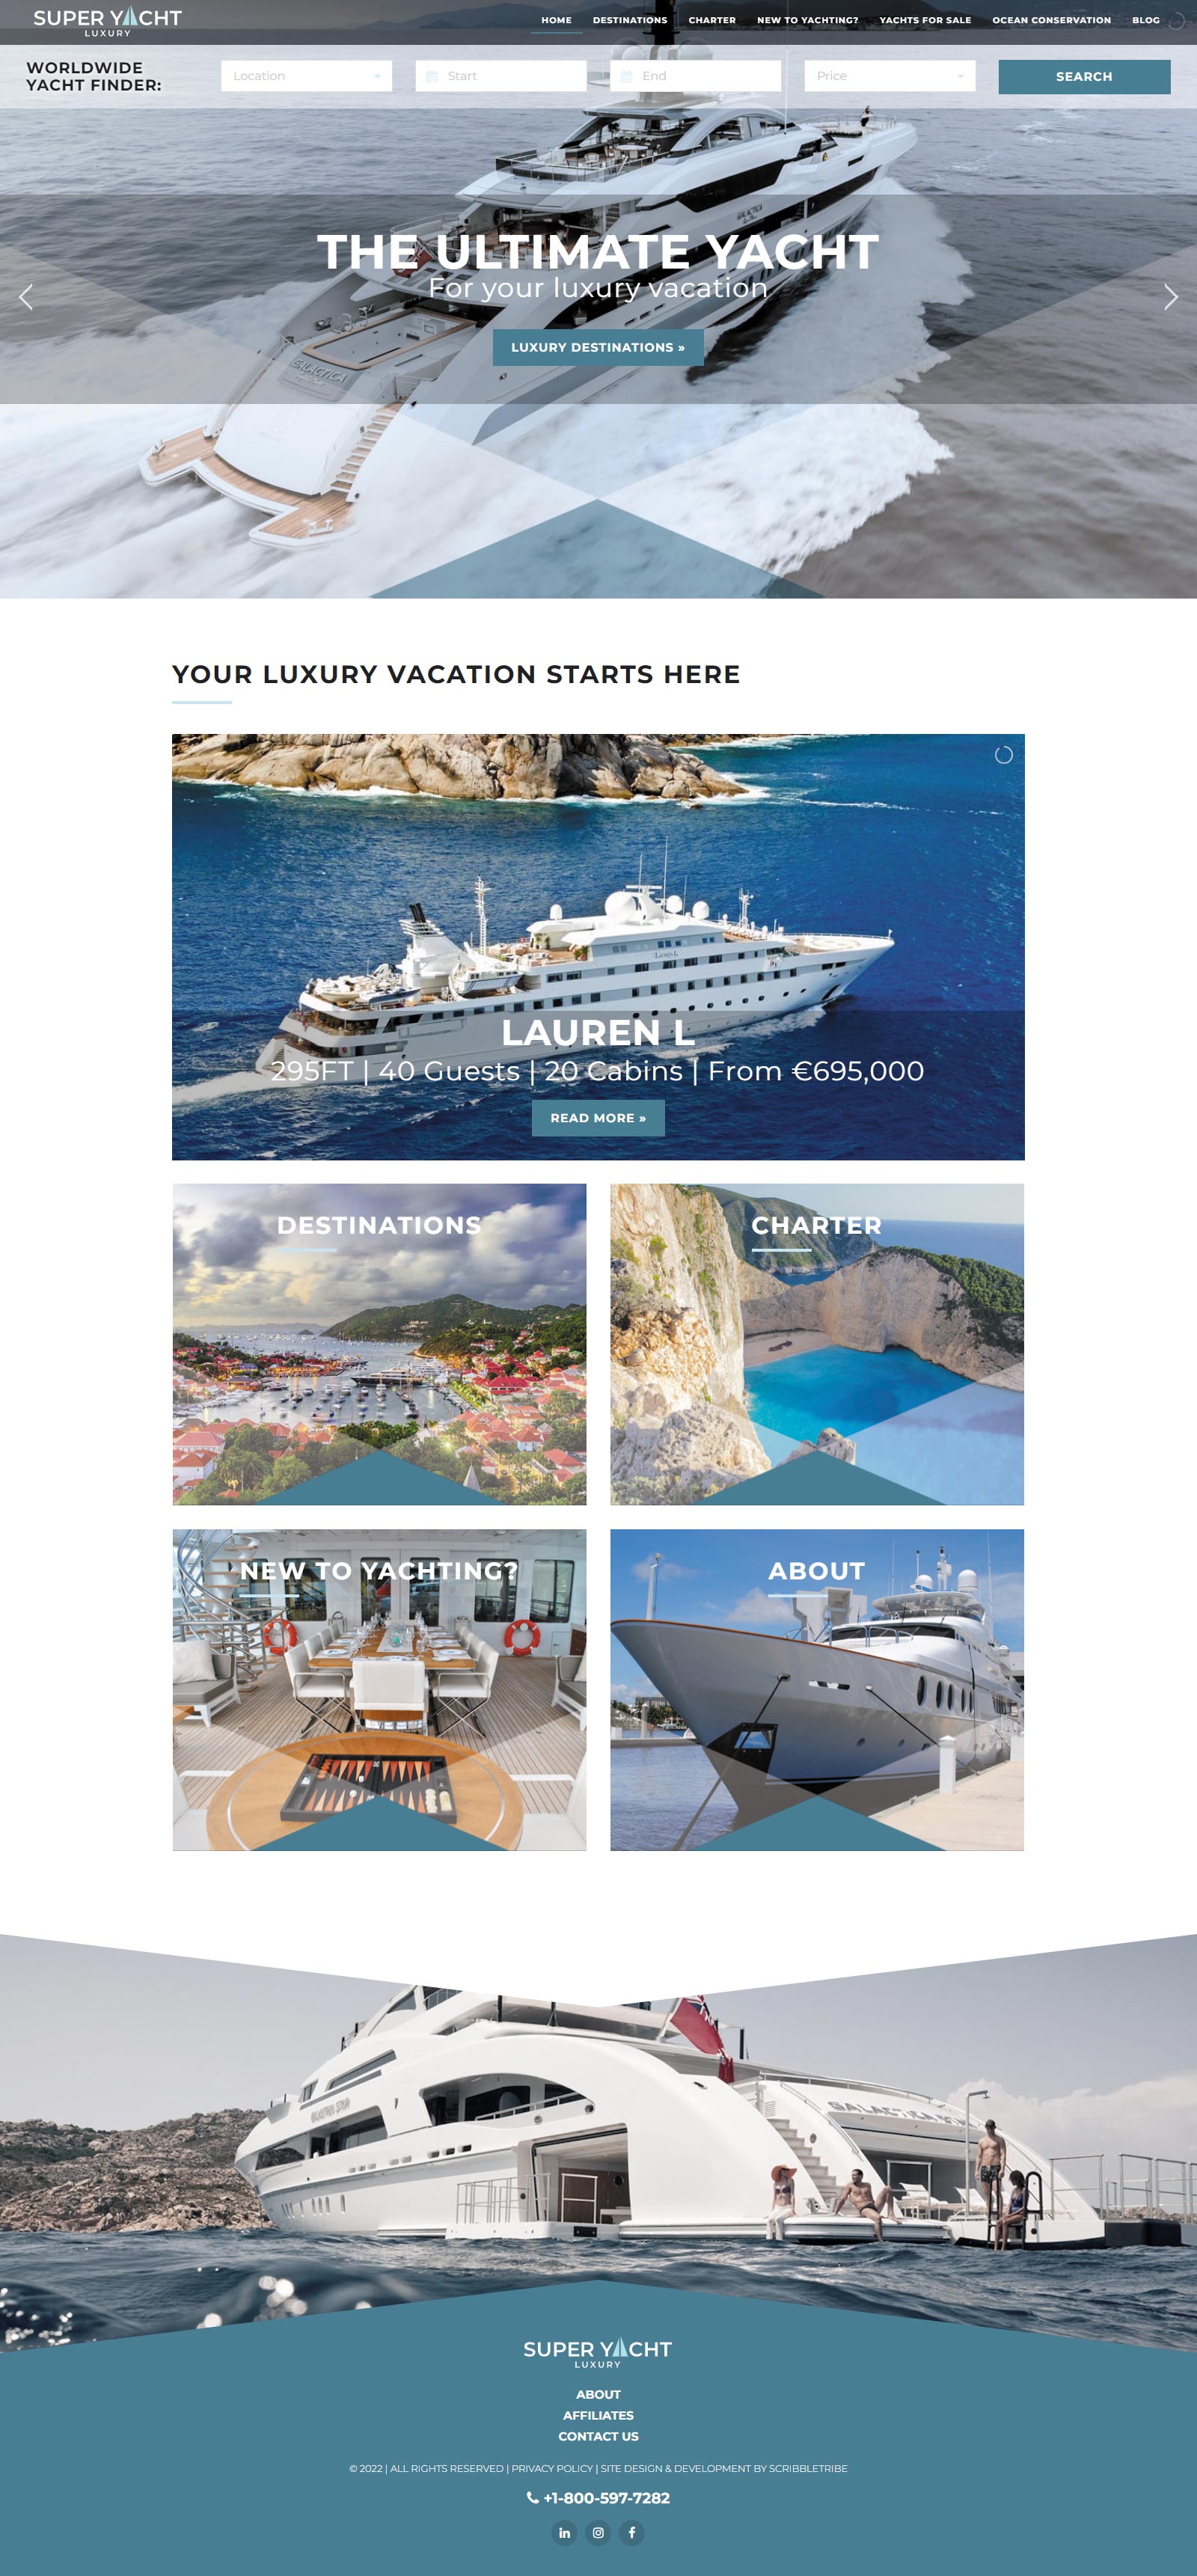 Superyacht Luxury Charter